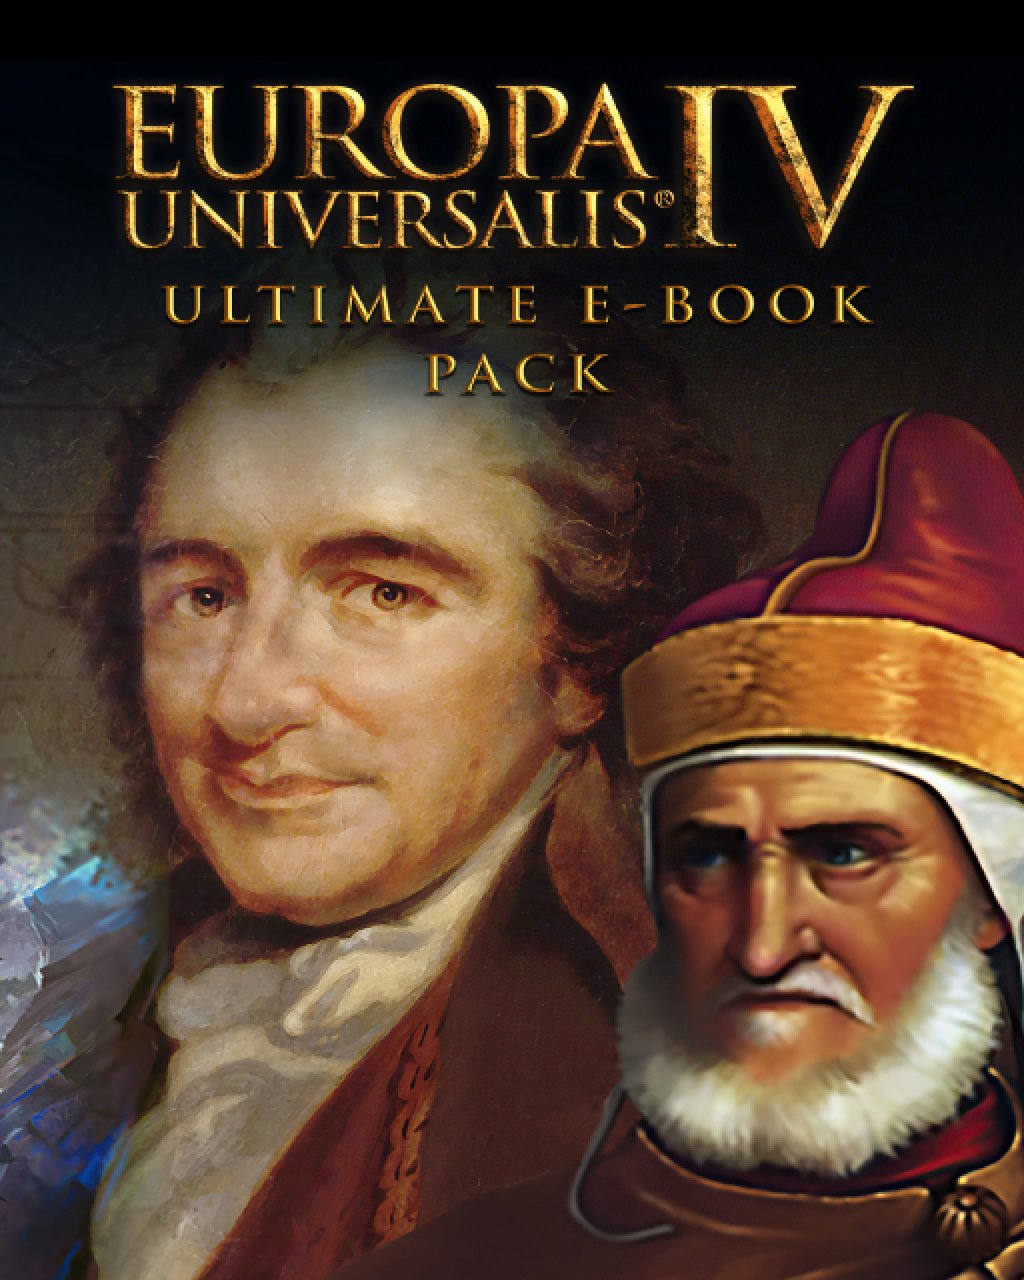 Europa Universalis IV Ultimate E-book Pack